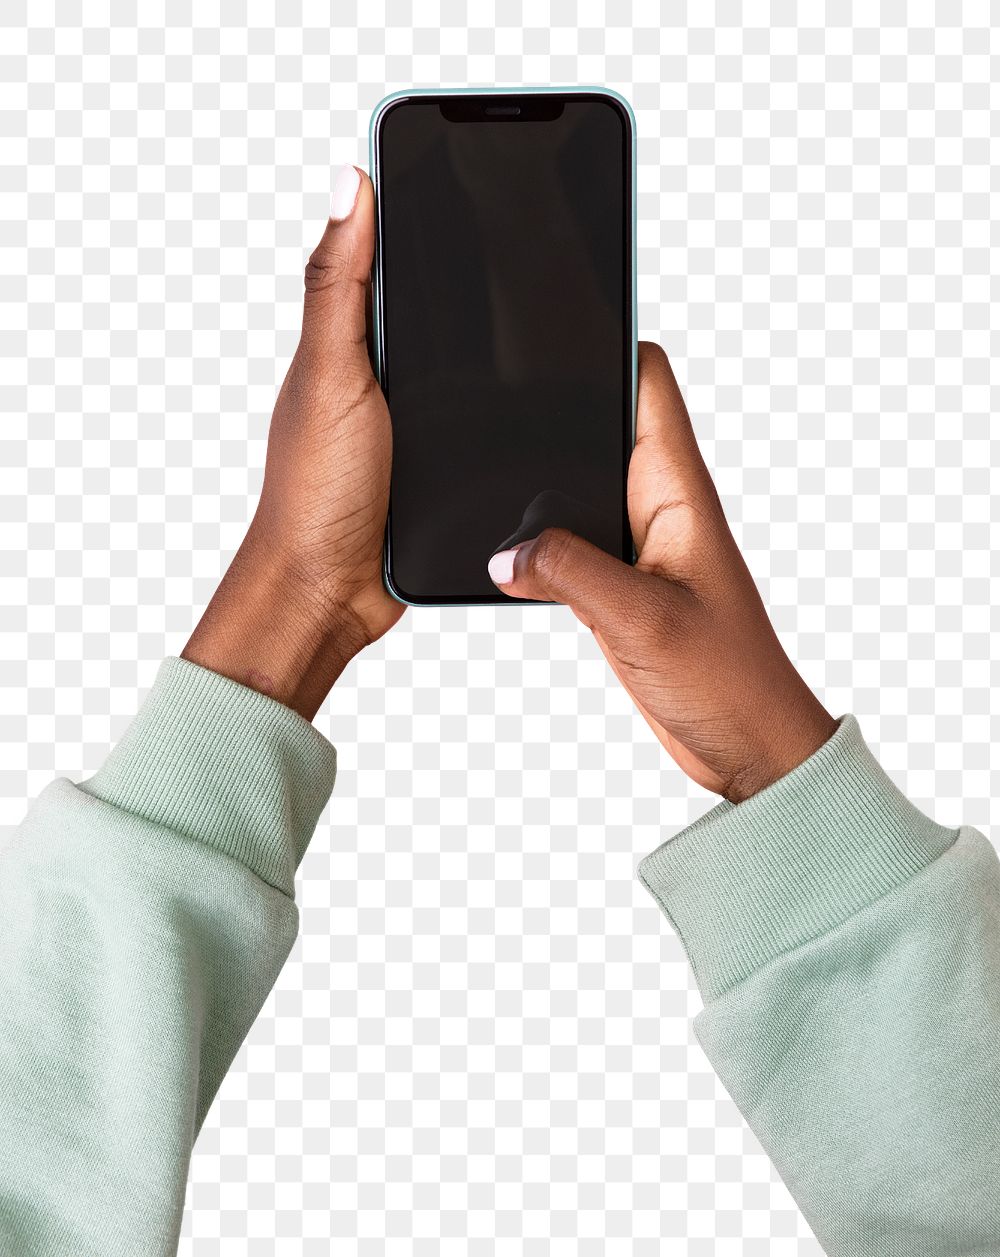 Hands holding smartphone on background transparent png